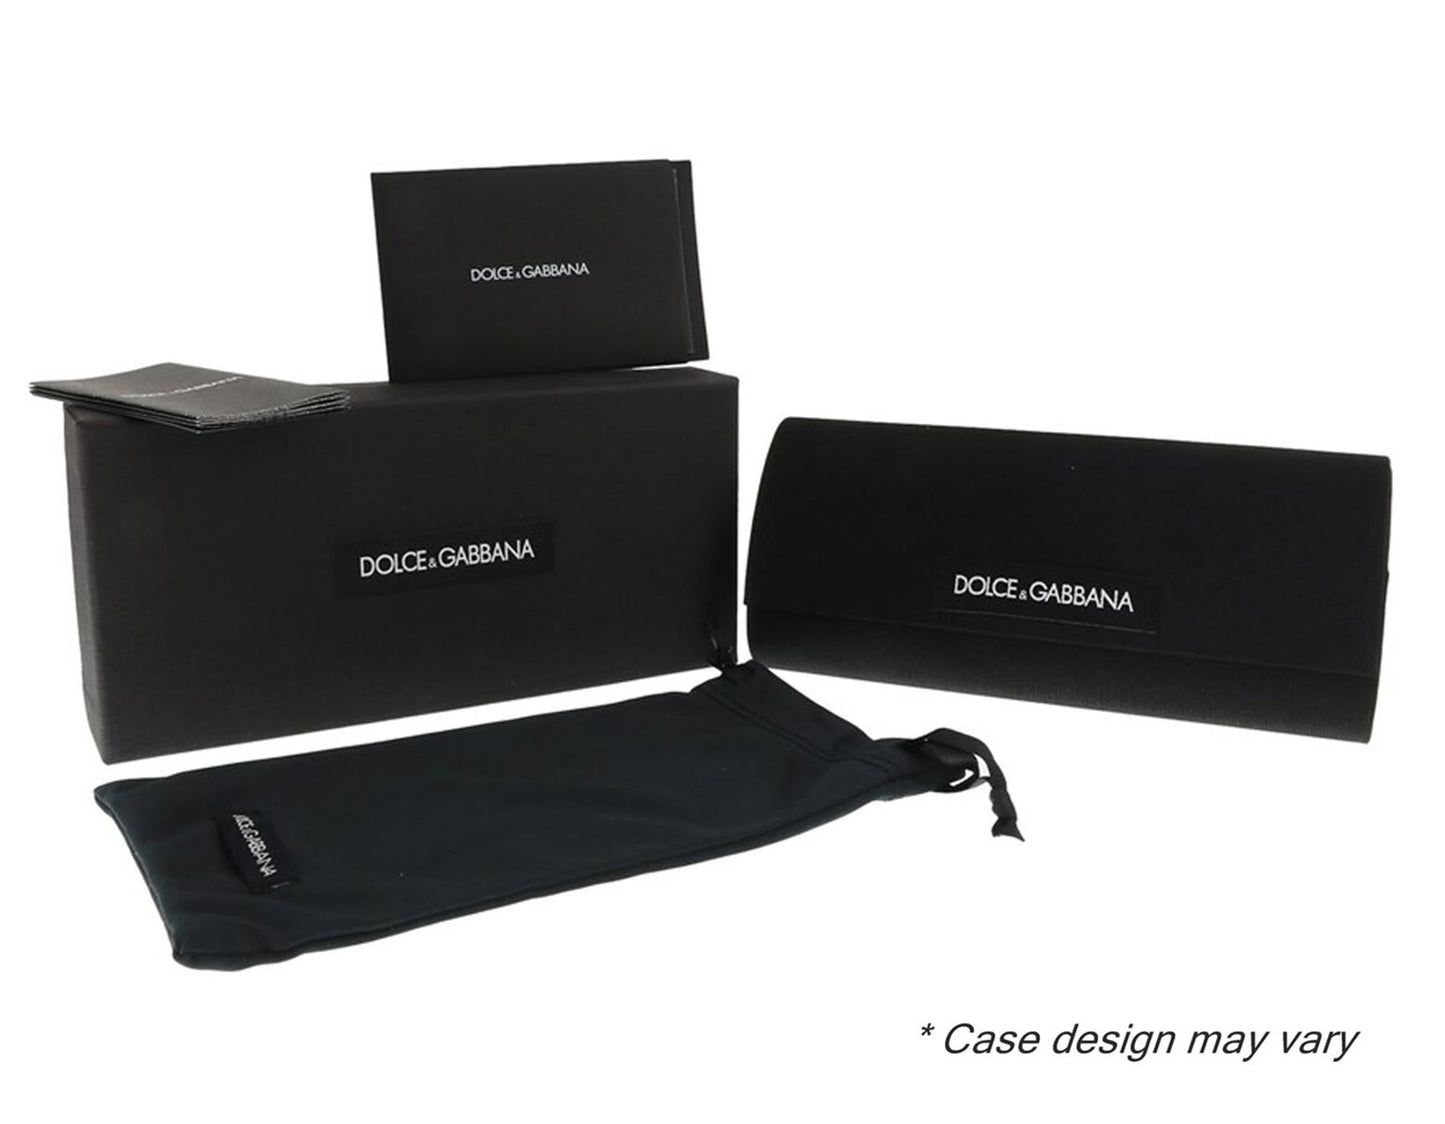 Dolce & Gabbana DG3350-501-51 51mm